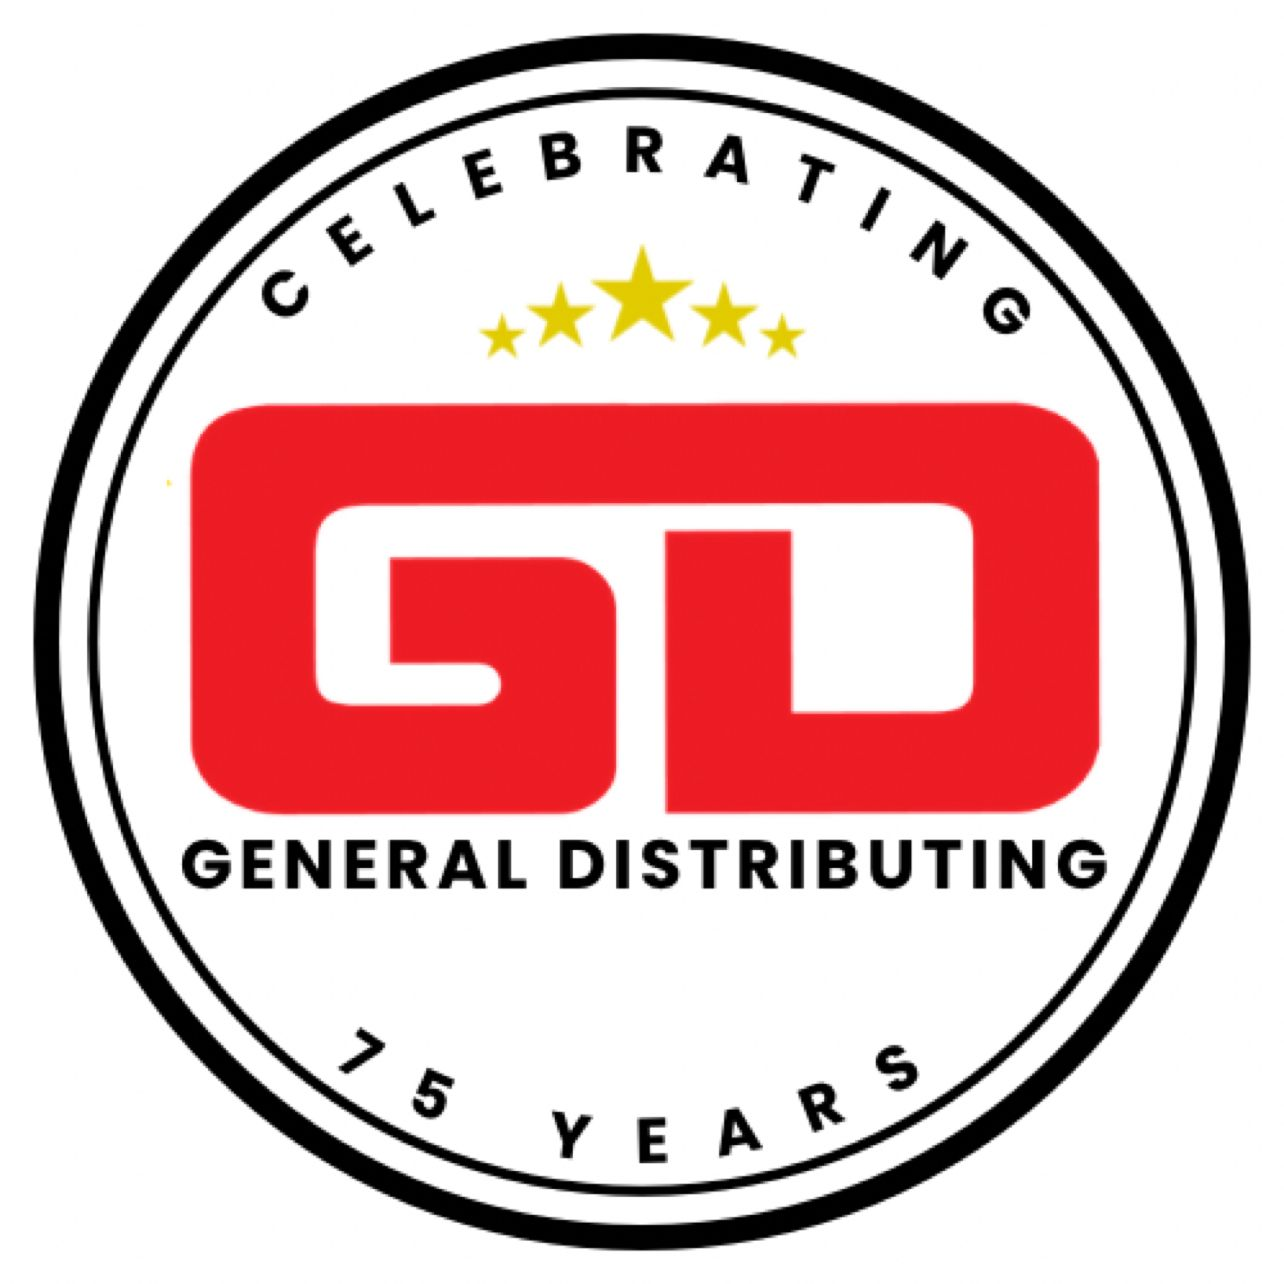 General Distribuitng 75